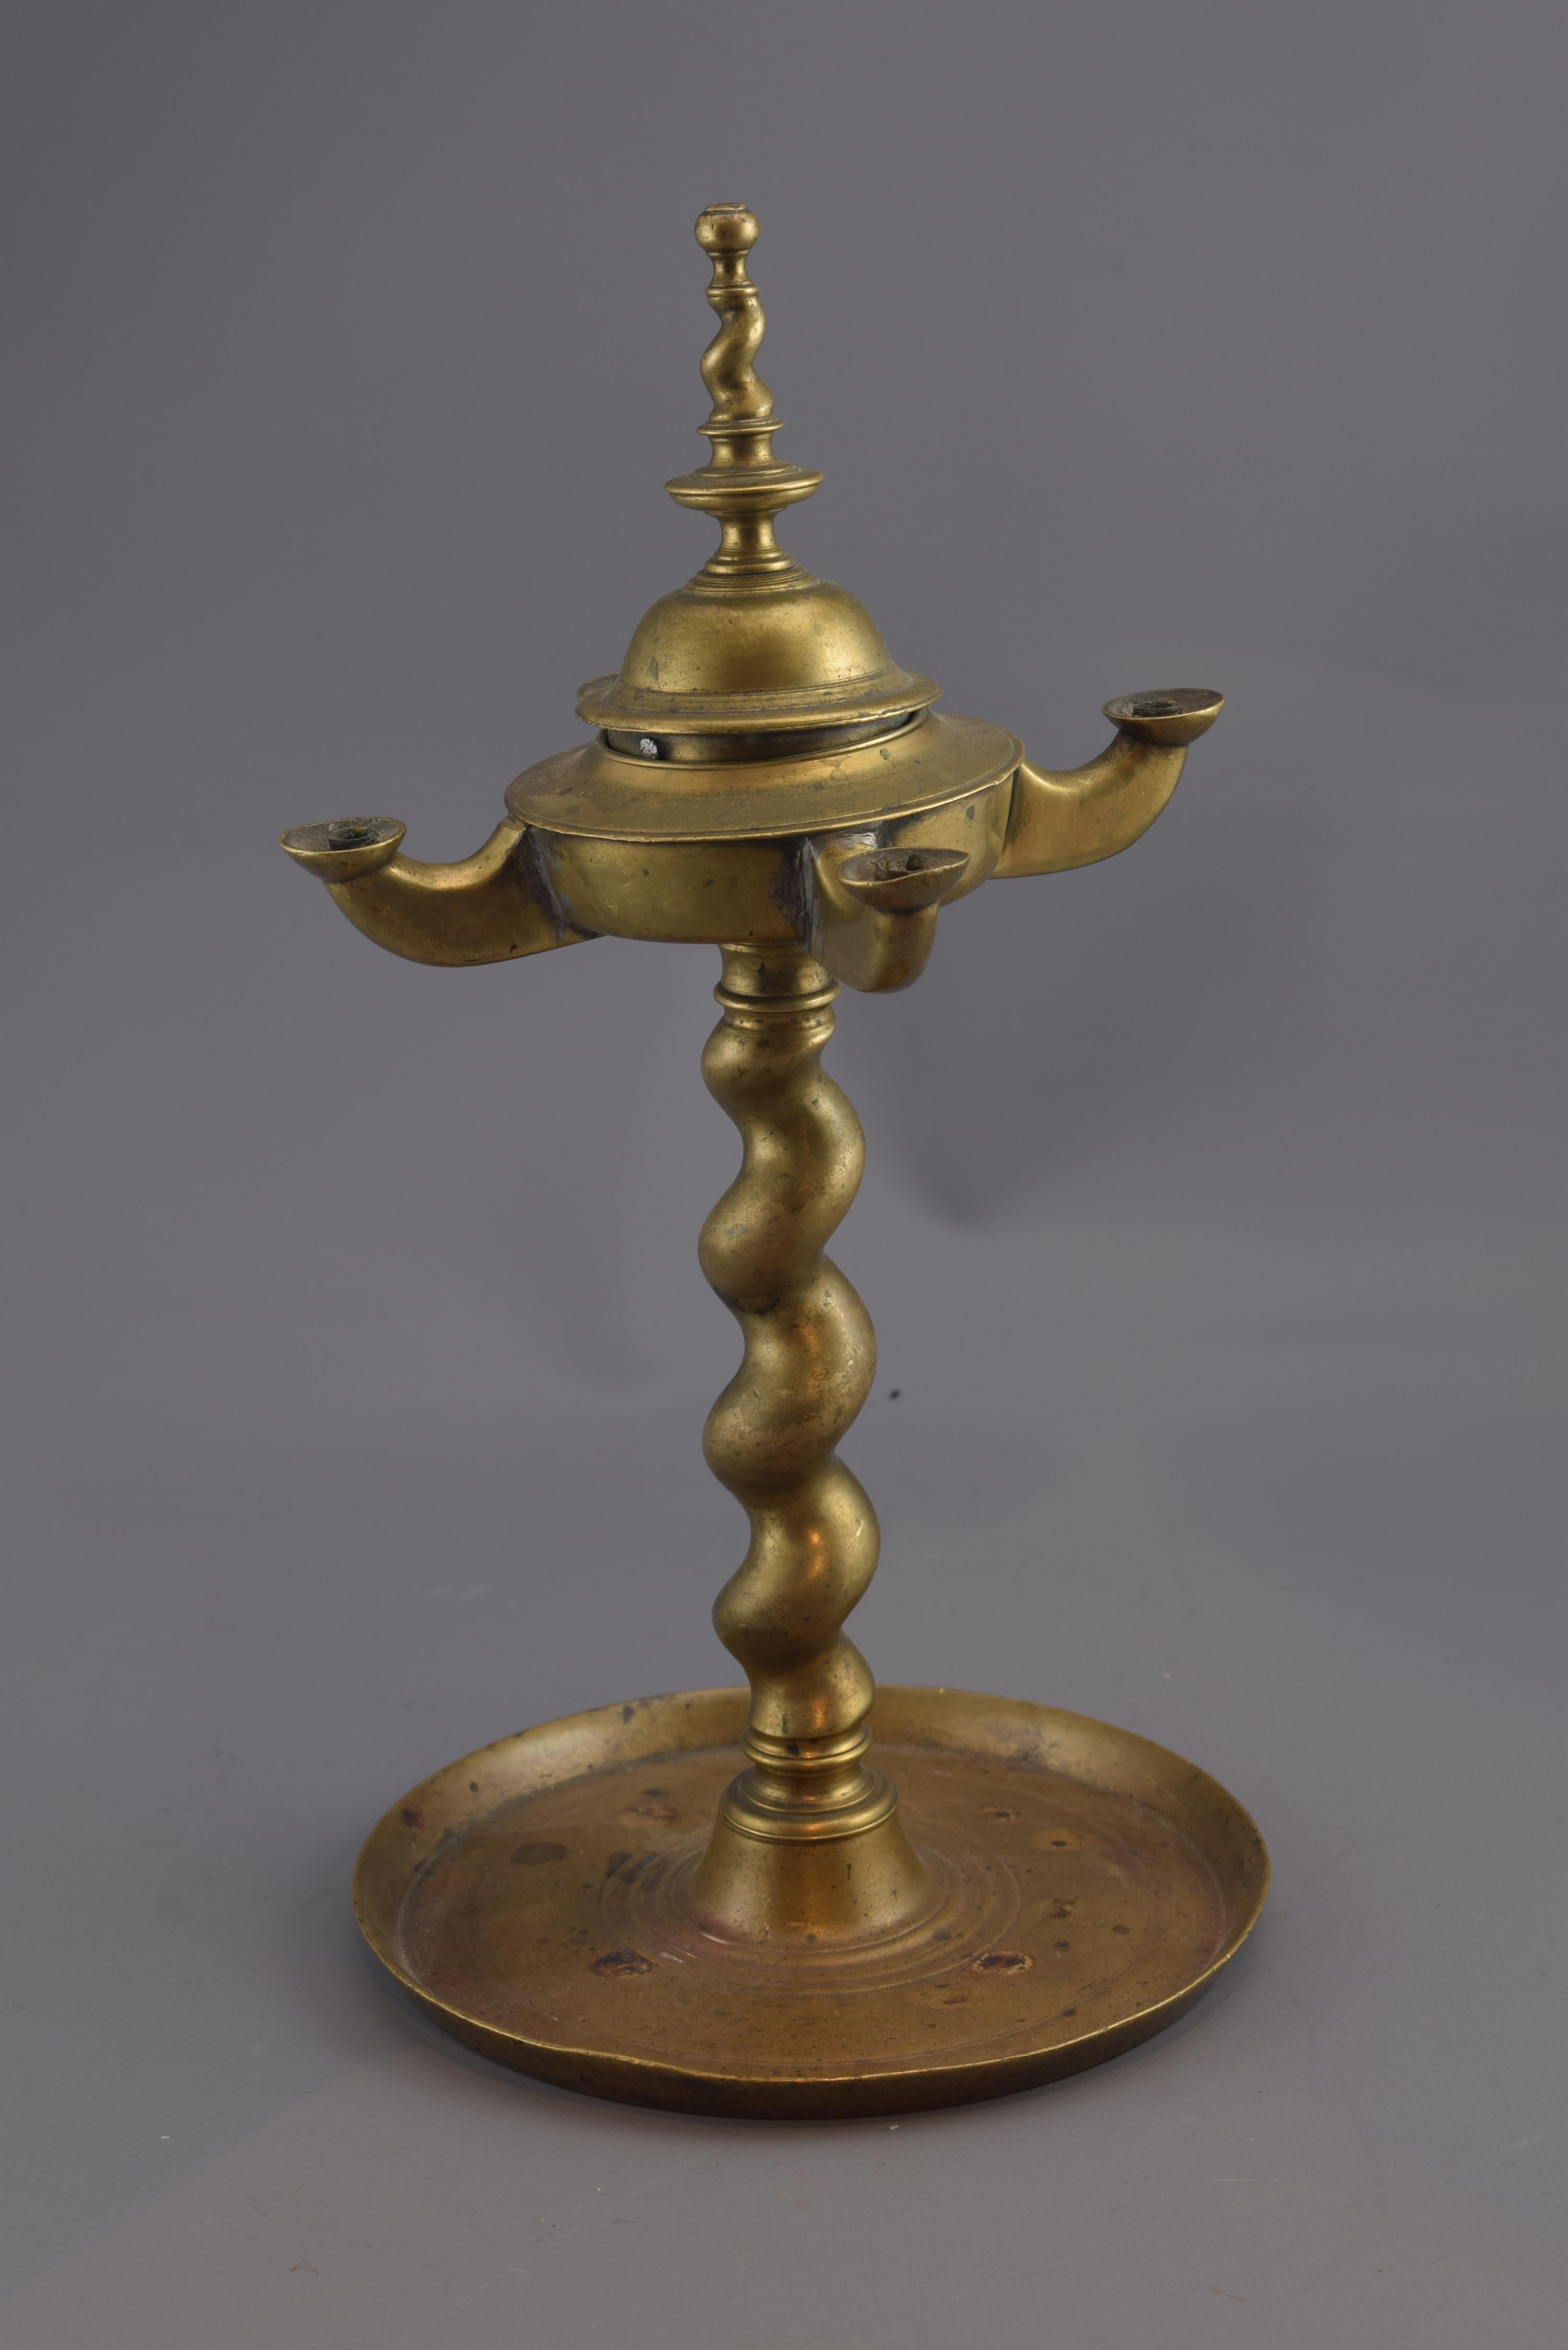 Bronze Lamp, 17th Century (Europäisch)